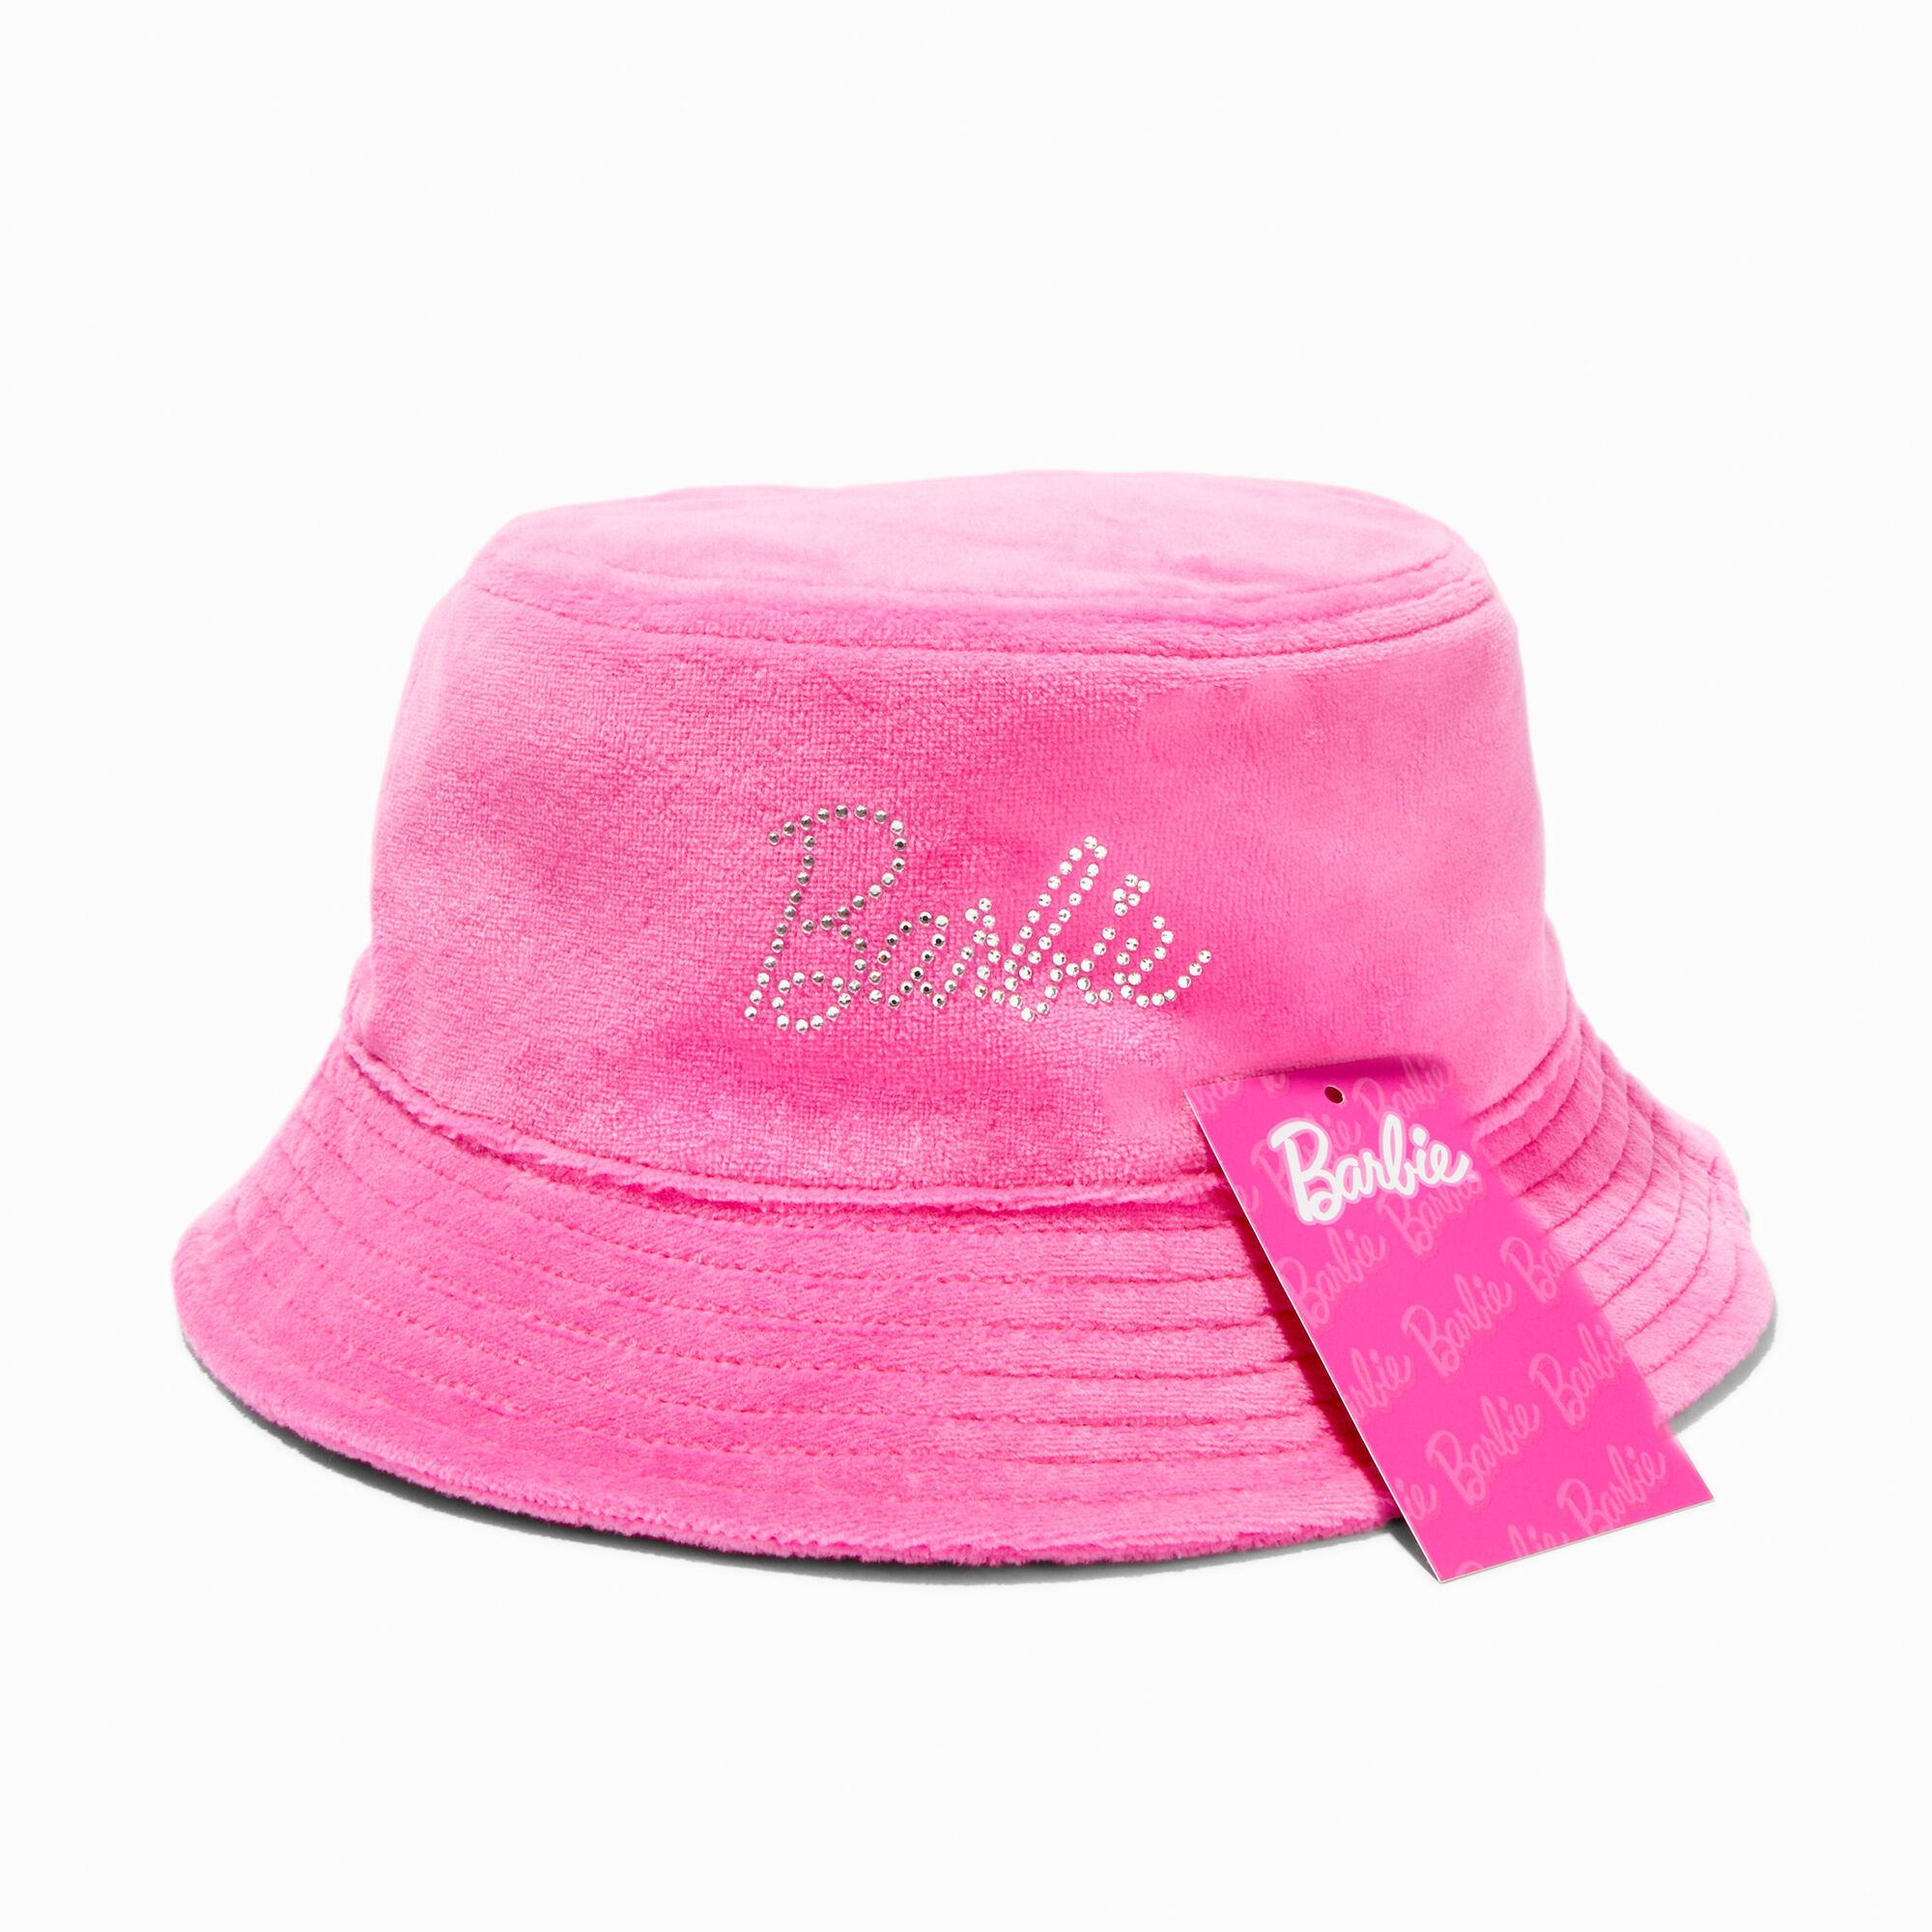 View Claires Barbie Velvet Bucket Hat Pink information